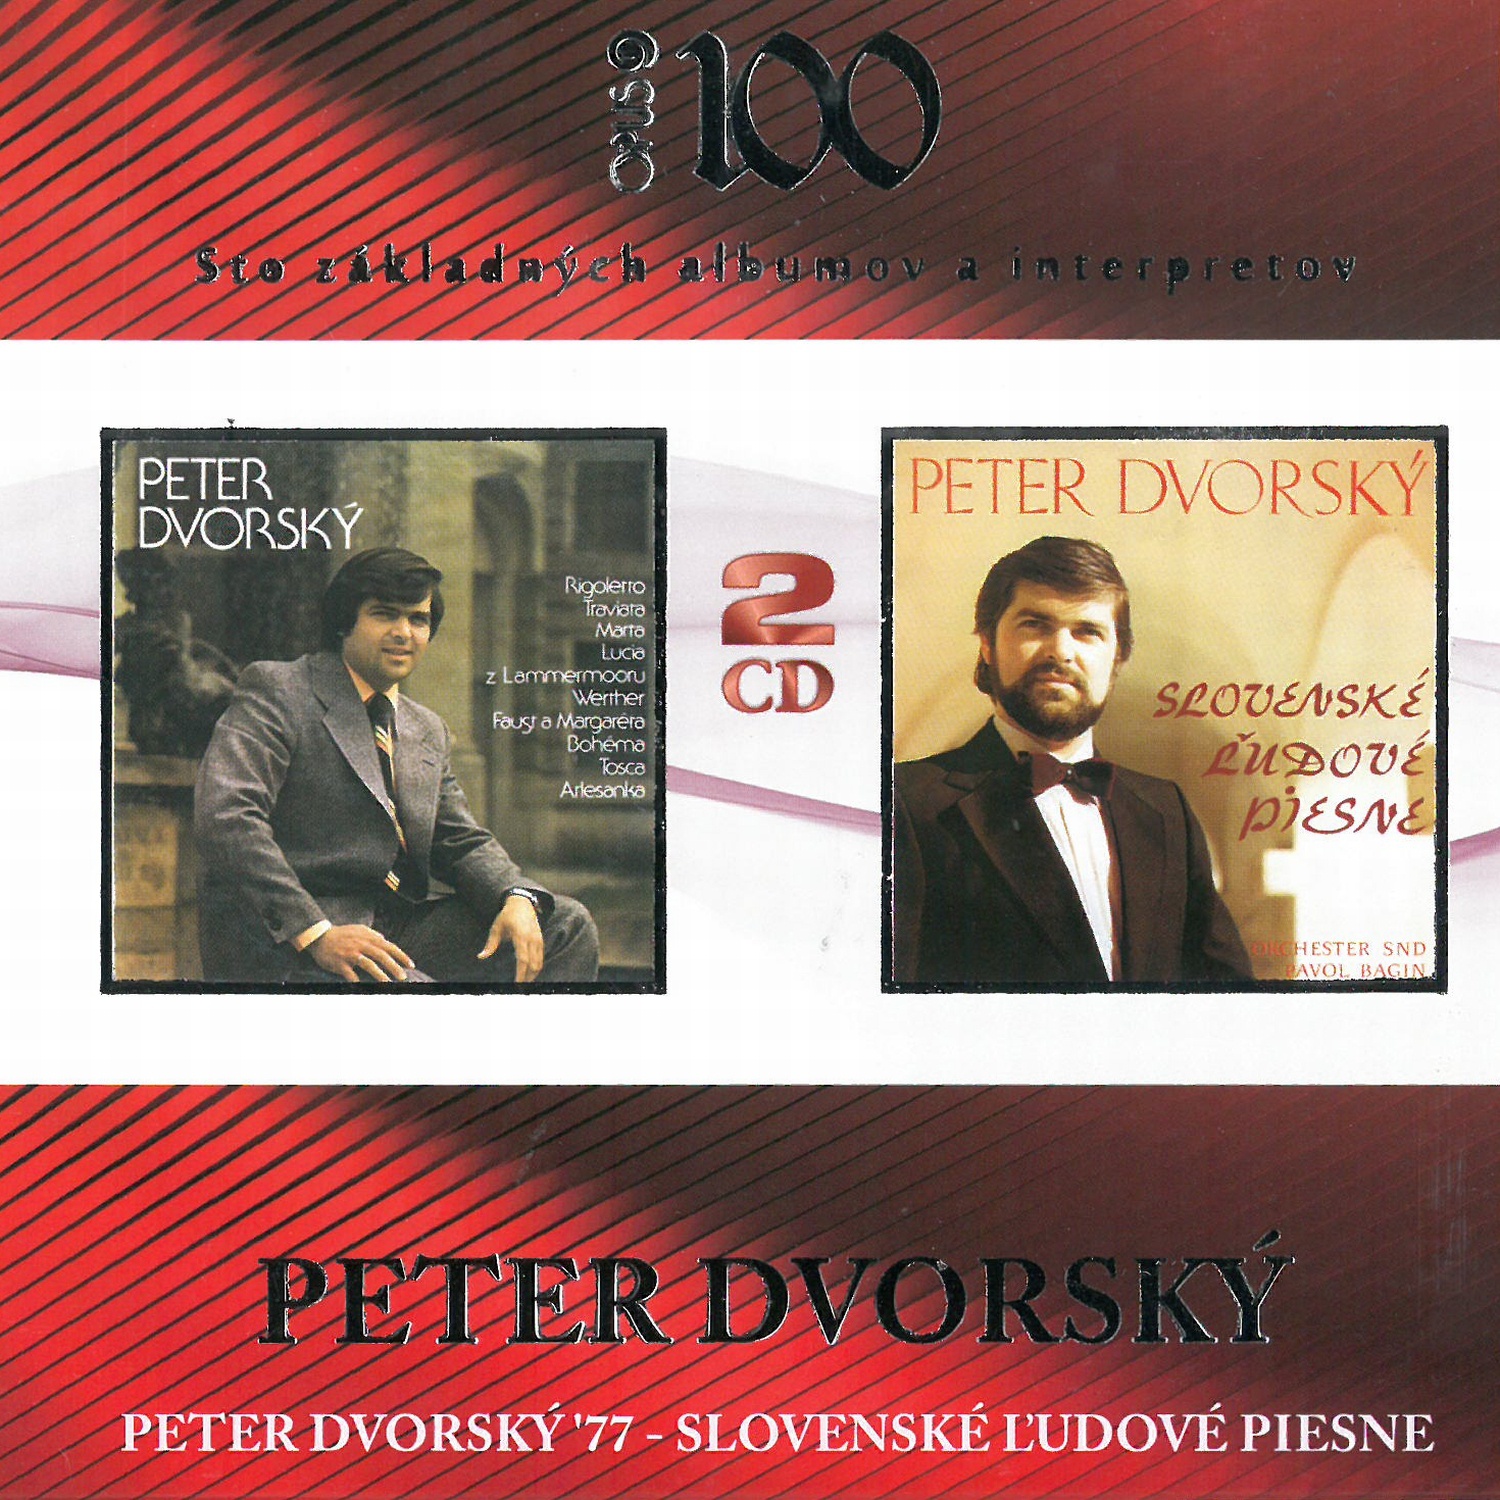 CD Shop - DVORSKY PETER 1977 / SLOVENSKE LUDOVE PIESNE